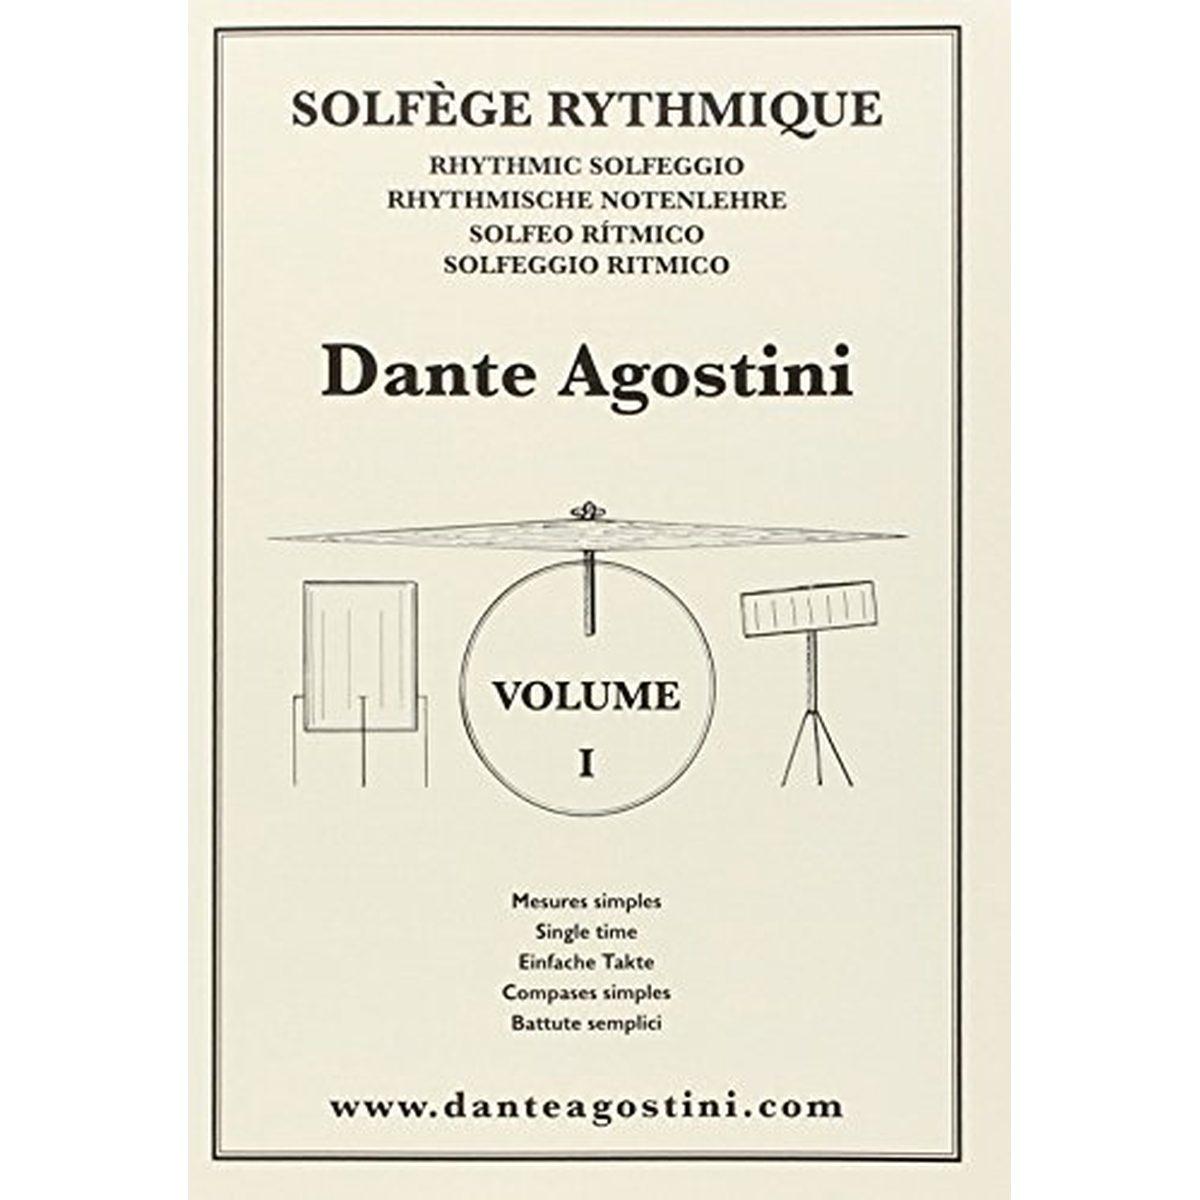 Dante Agostini: Solfege rythmique